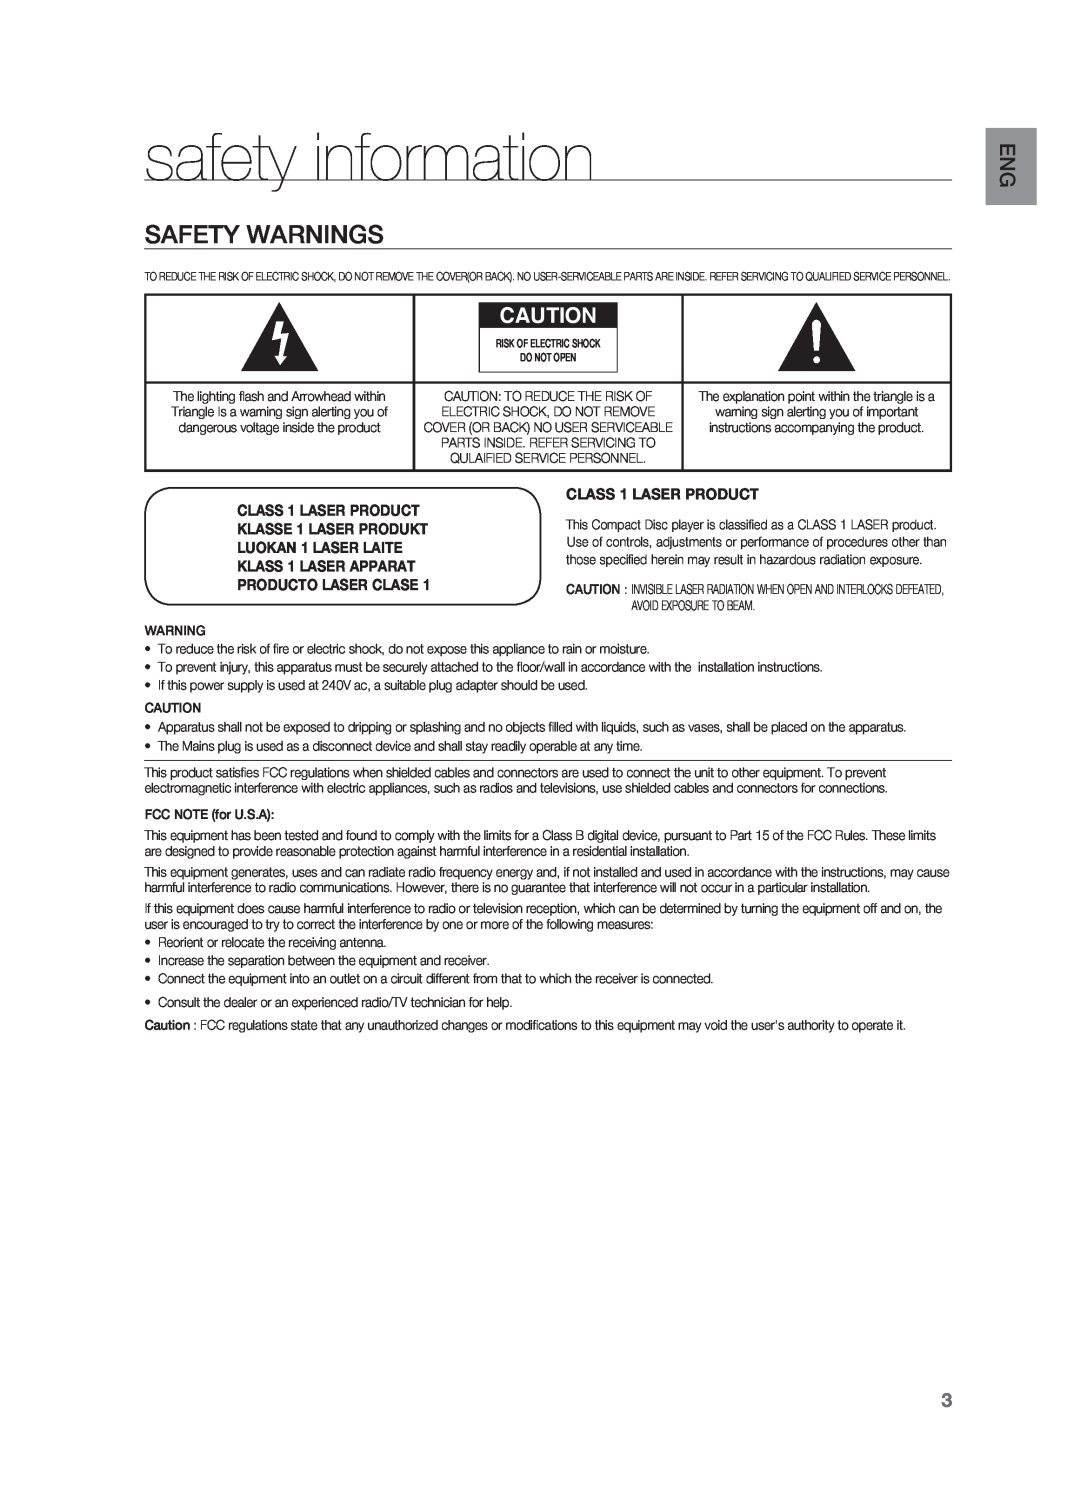 Samsung HT-TZ312 safety information, Safety Warnings, CLASS 1 LASER PRODUCT KLASSE 1 LASER PRODUKT, Producto Laser Clase 